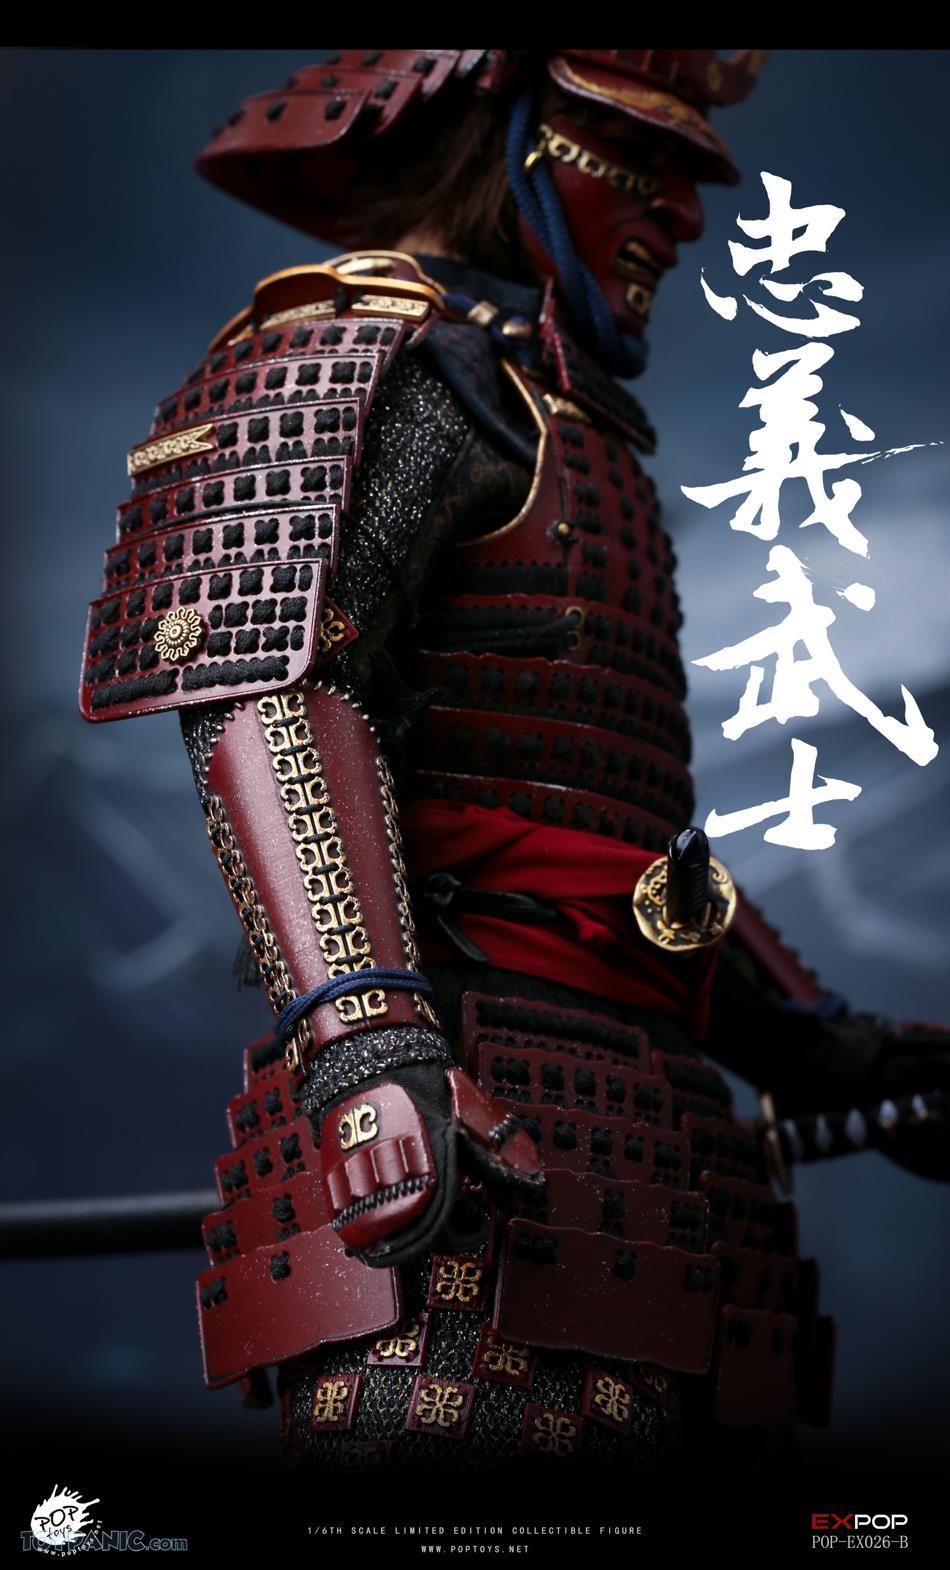 samurai action figure